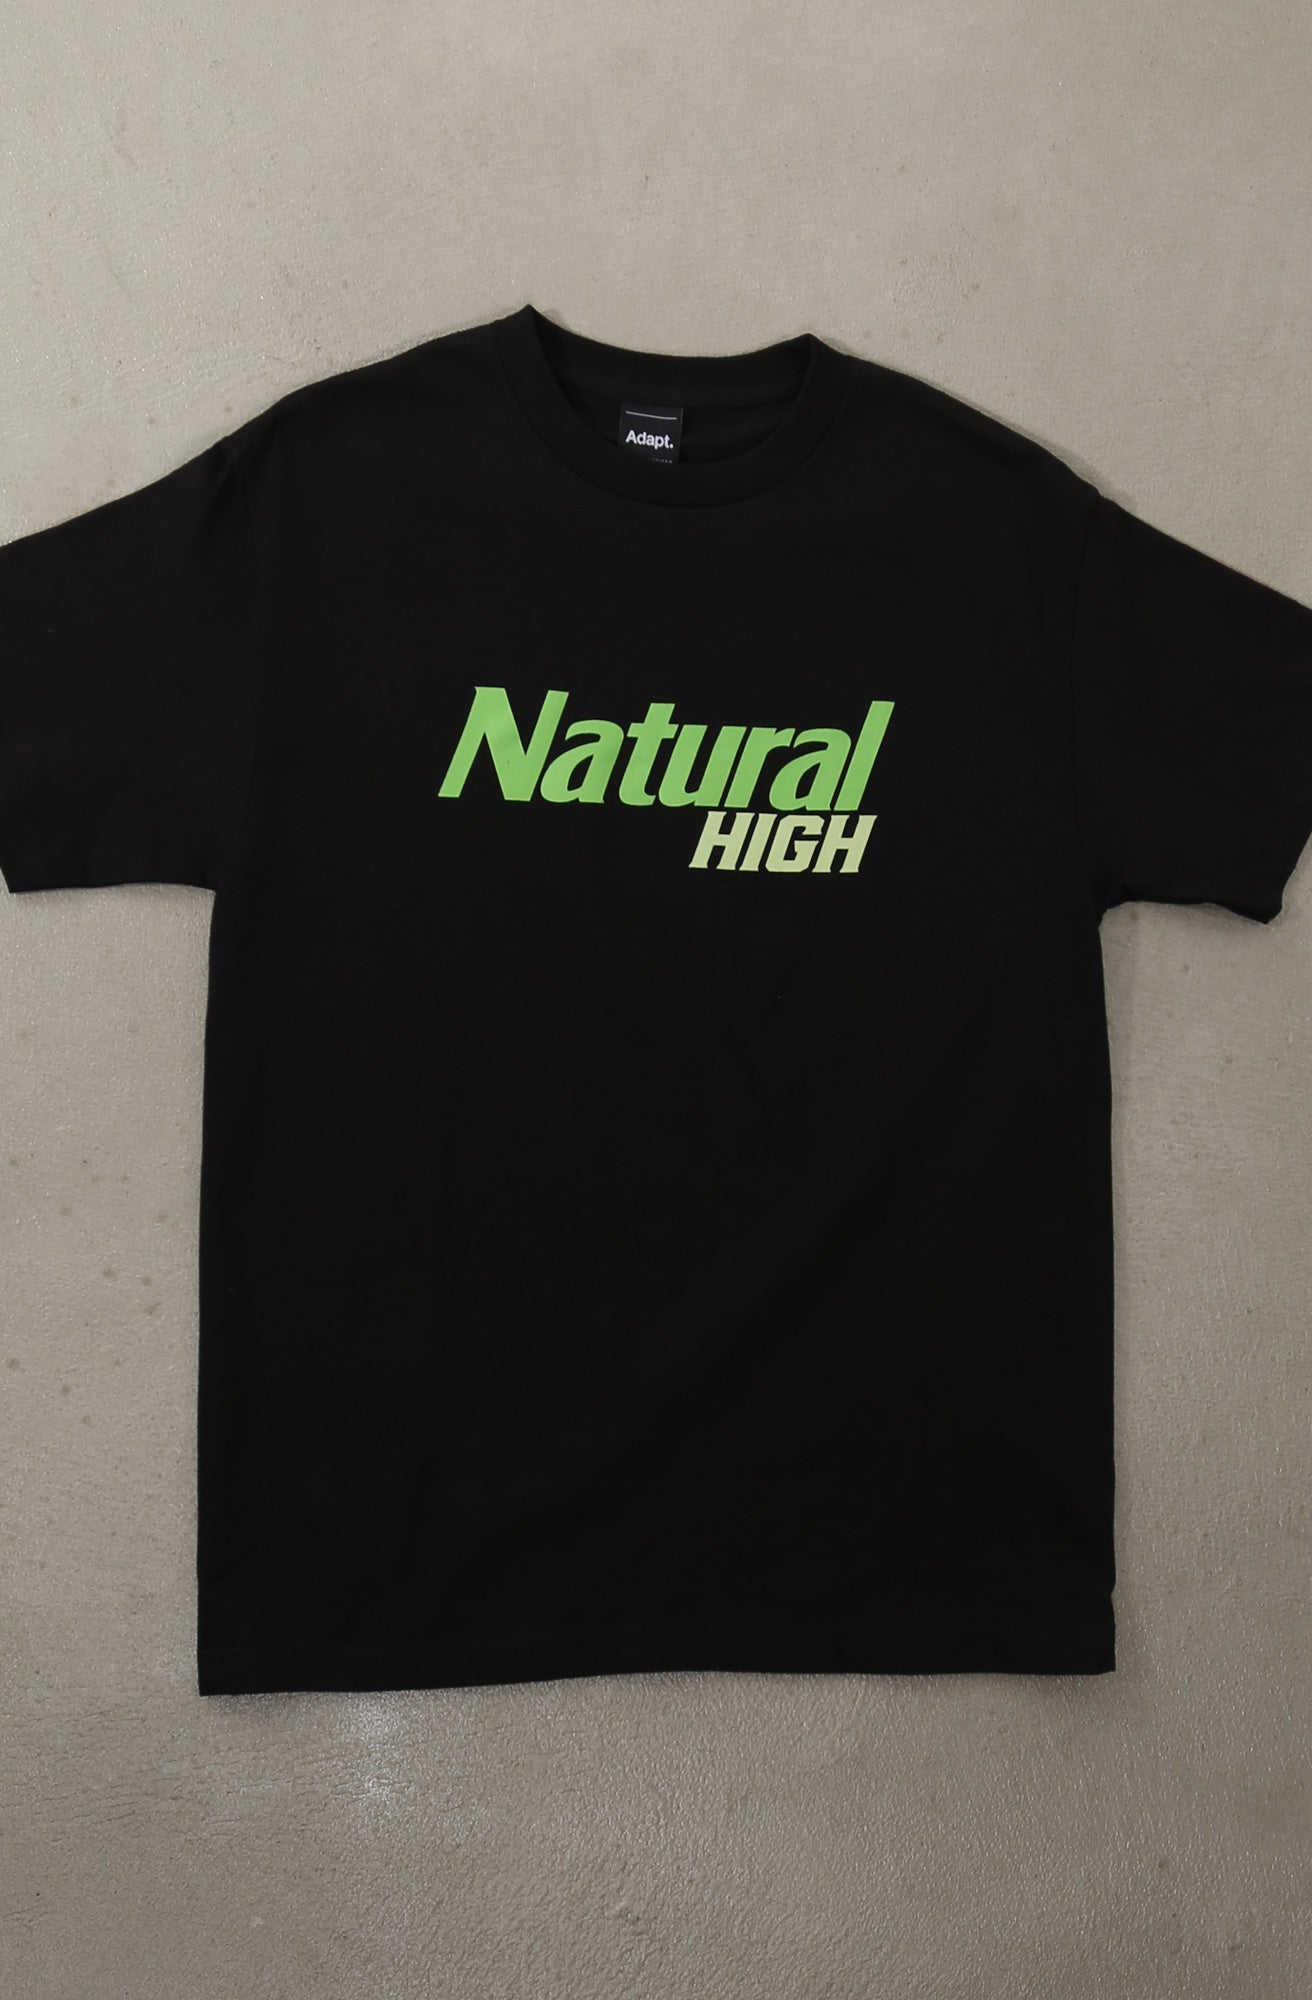 Natural High (Men's Black/Green Tee)